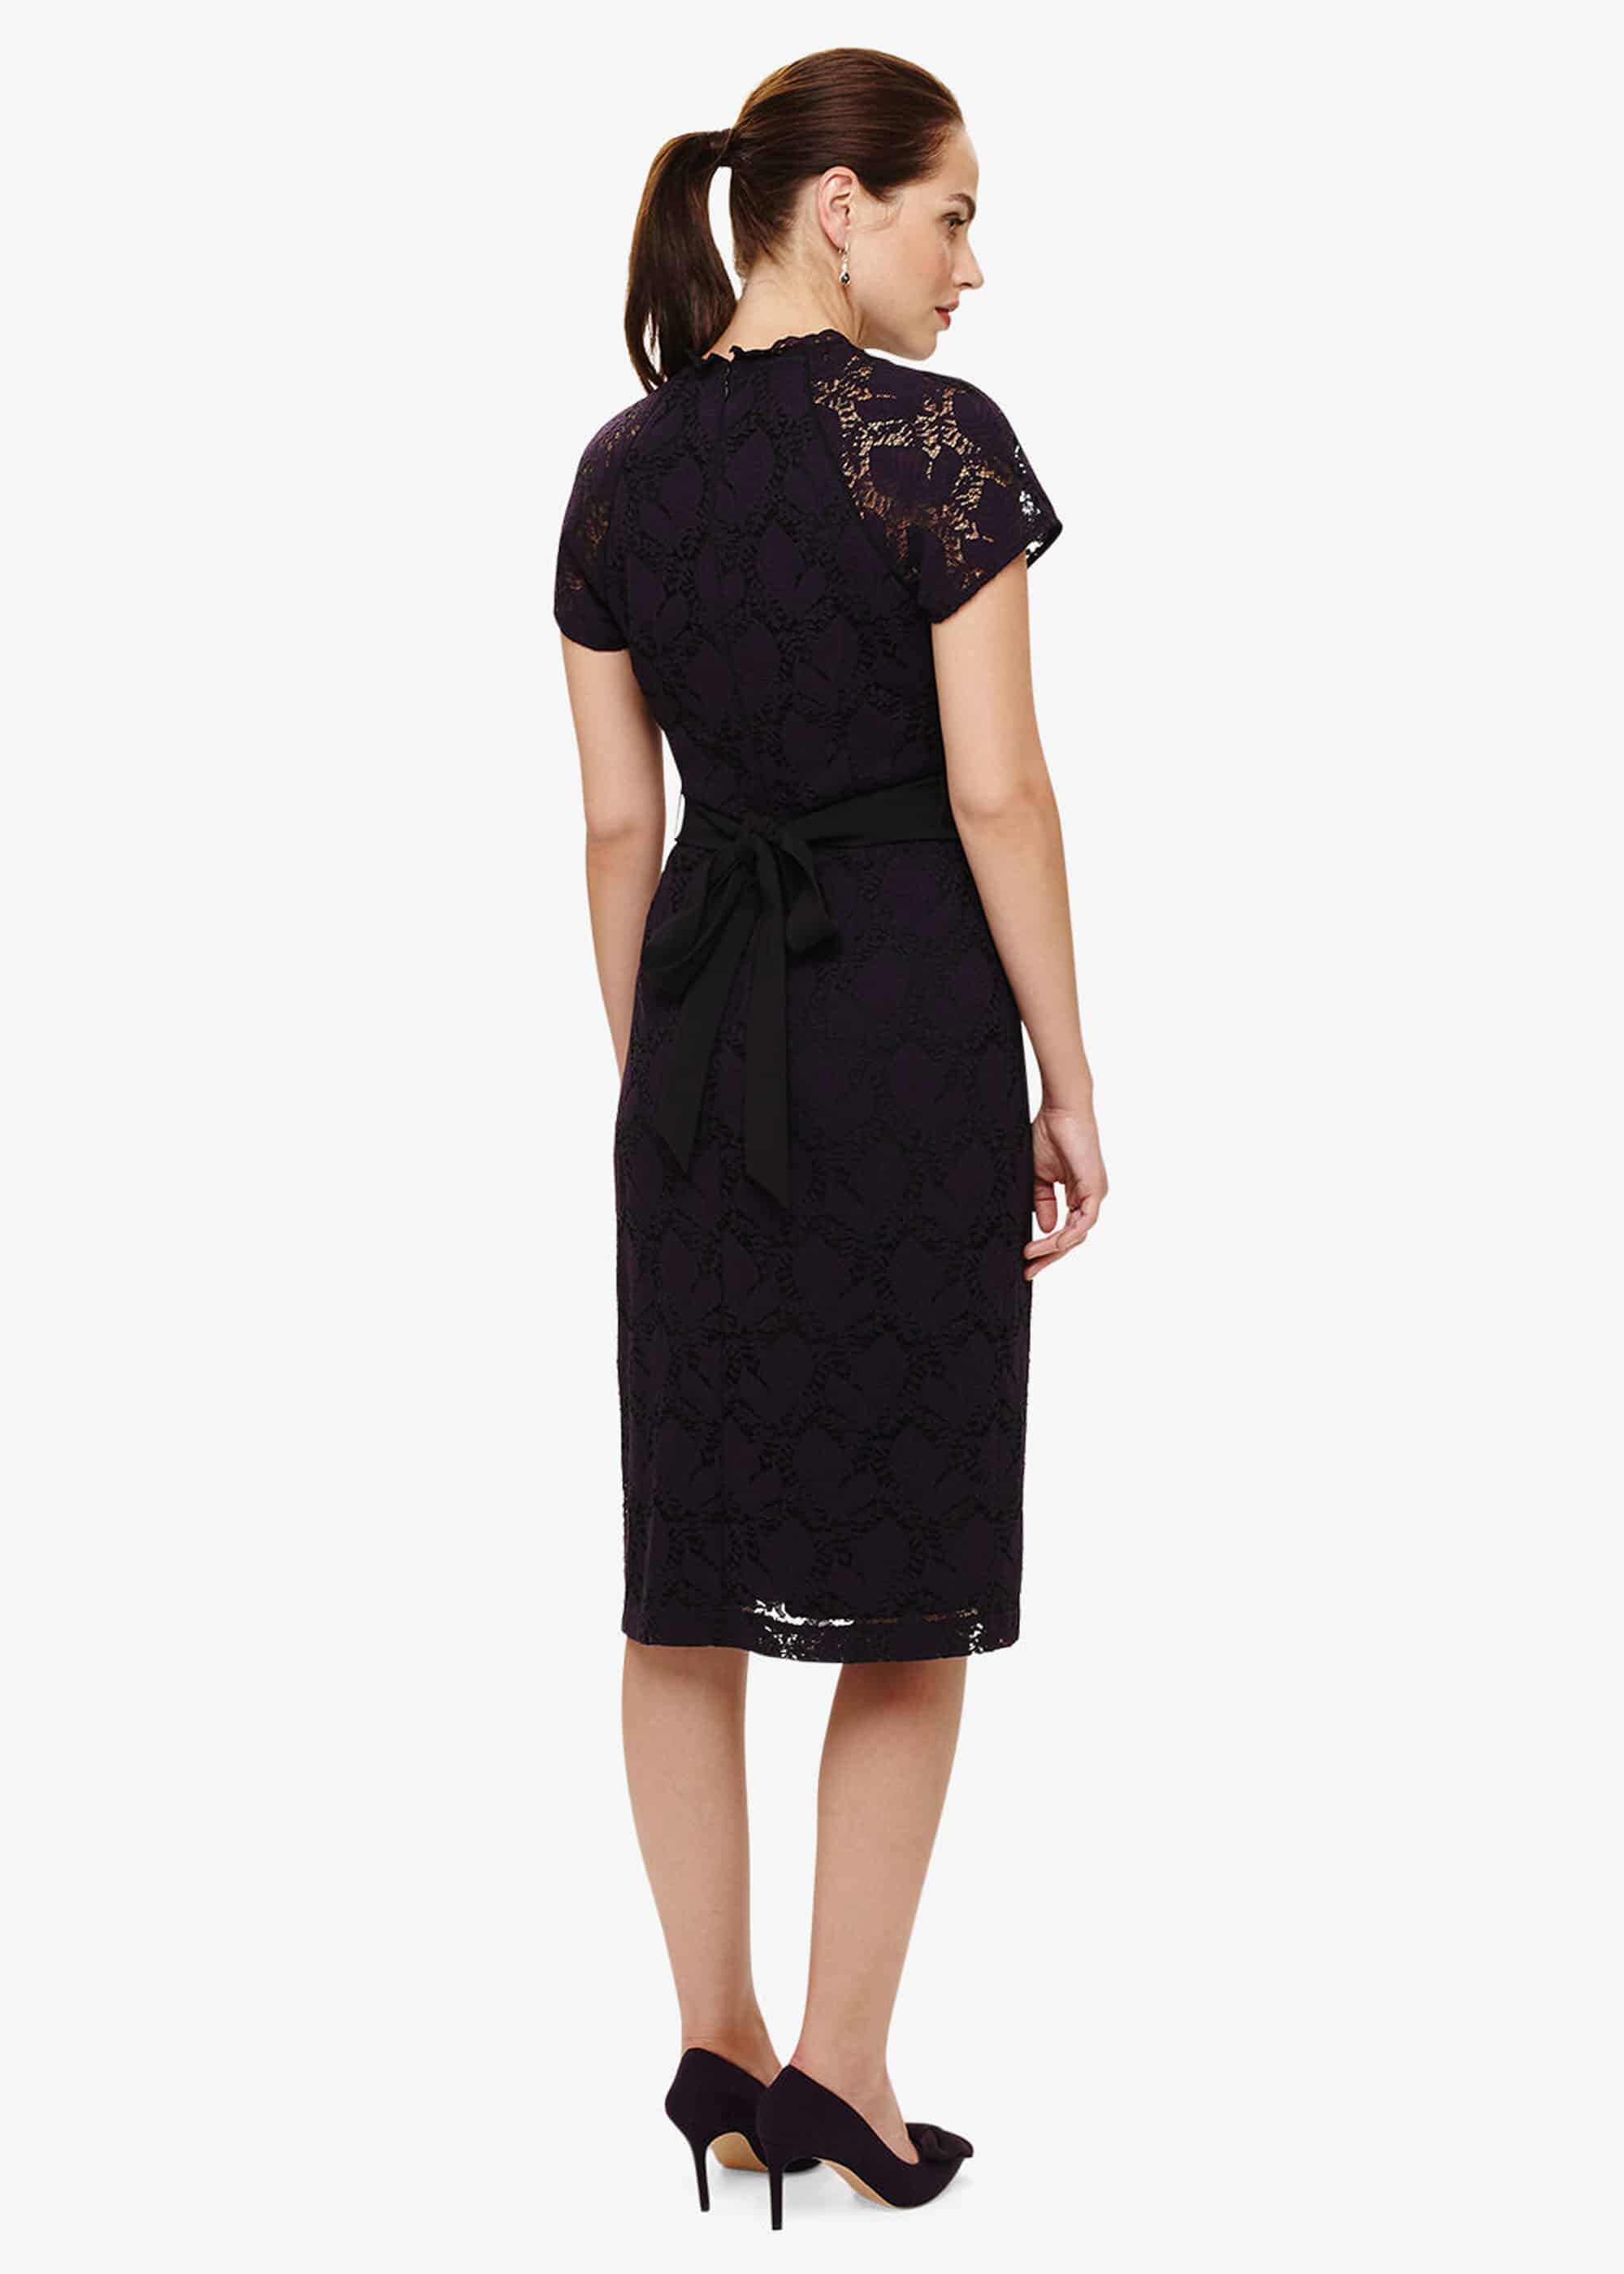 phase eight purple lace dress